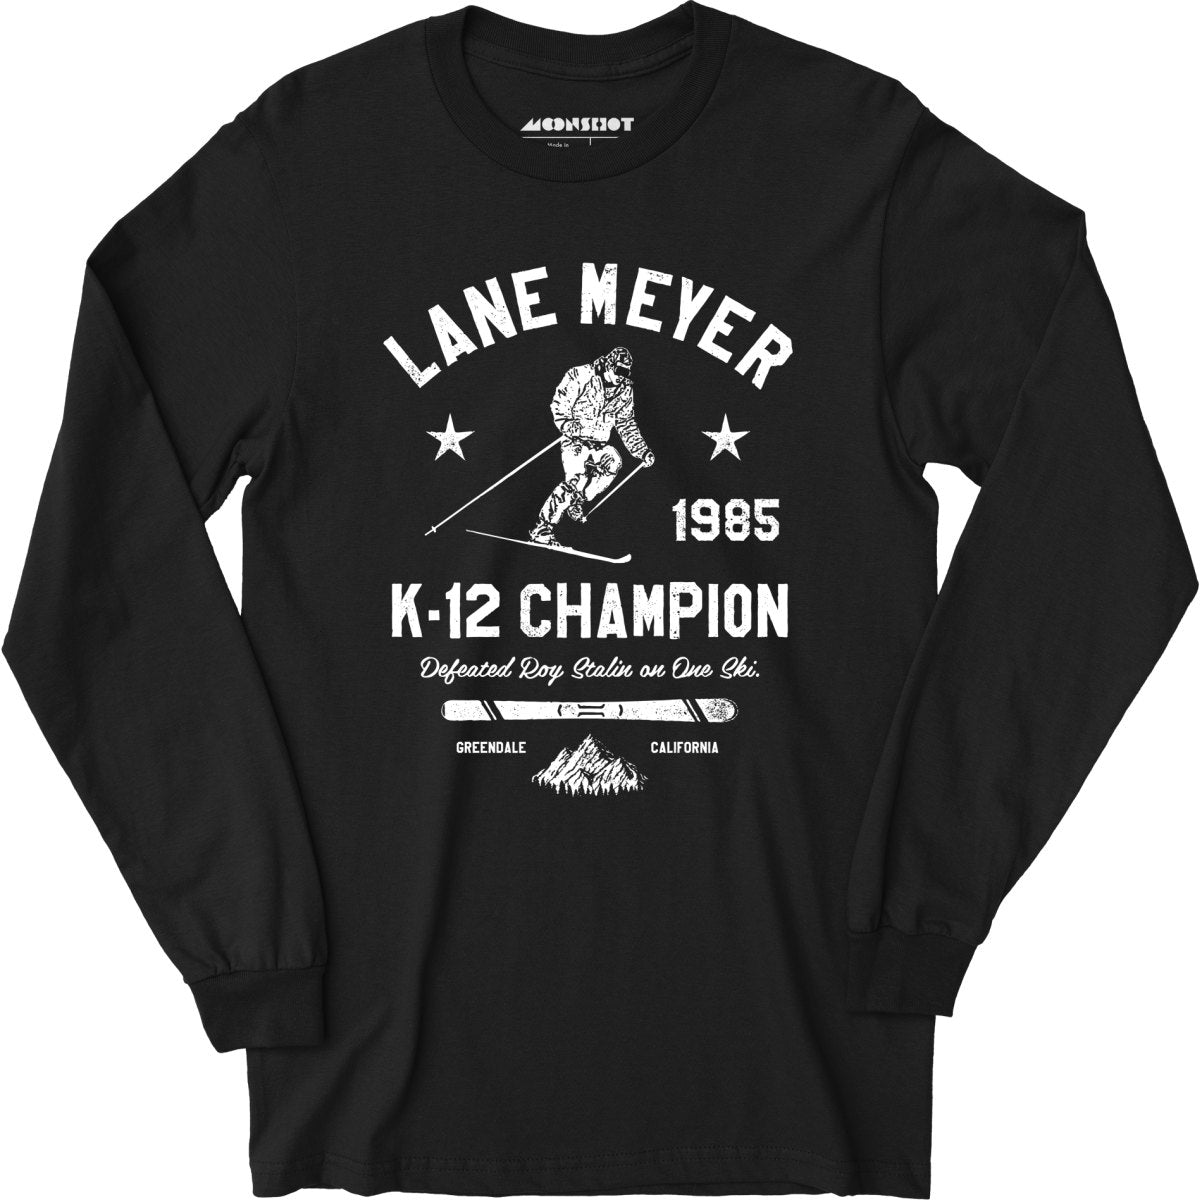 Lane Meyer K-12 Champion - Long Sleeve T-Shirt